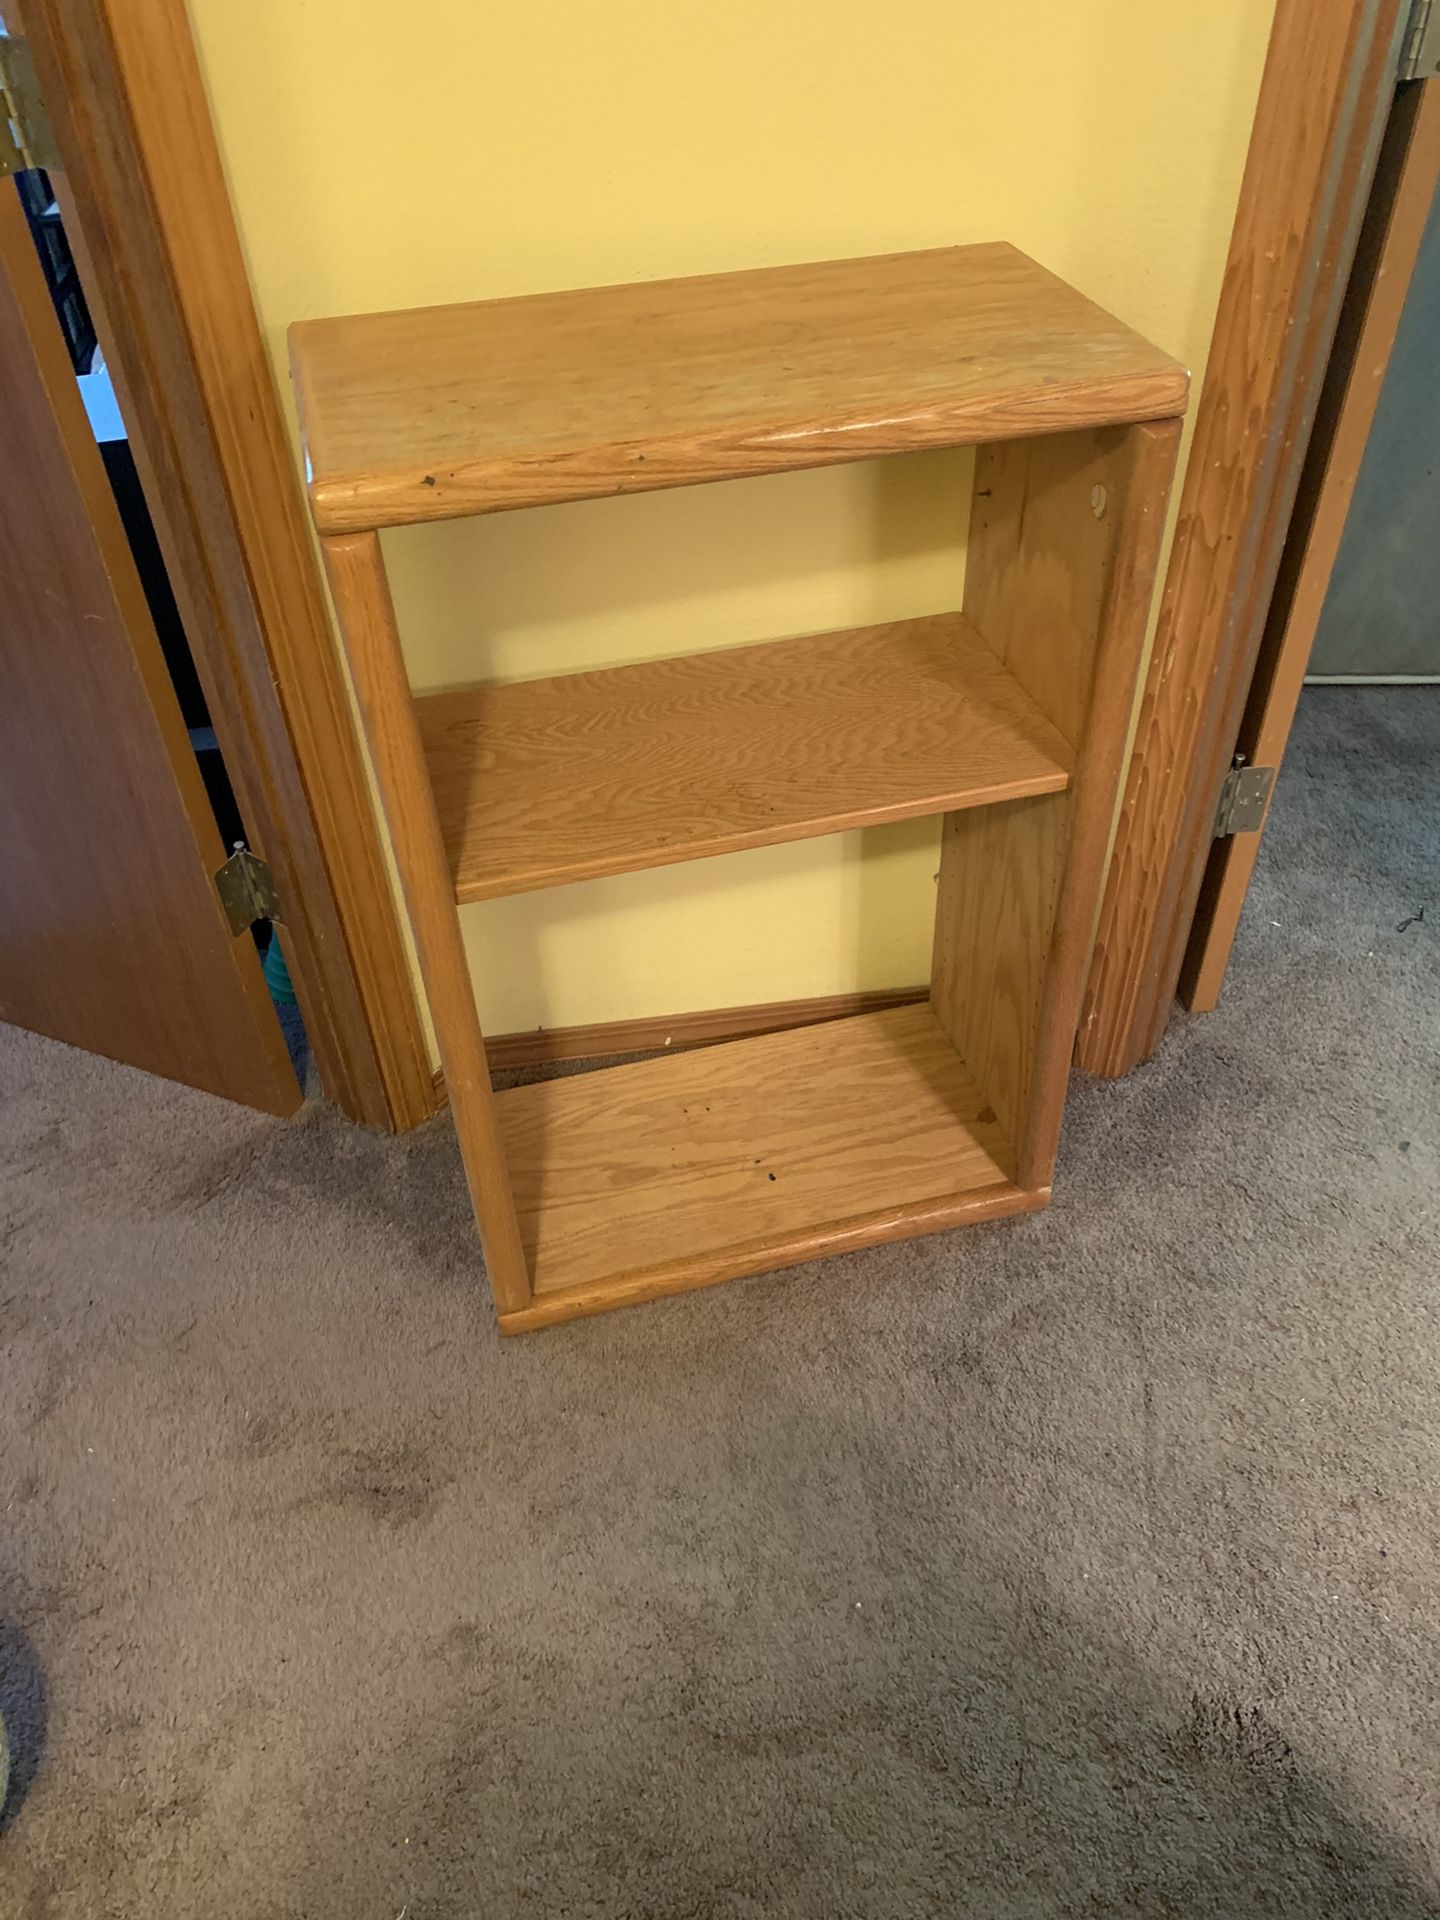 Small shelves